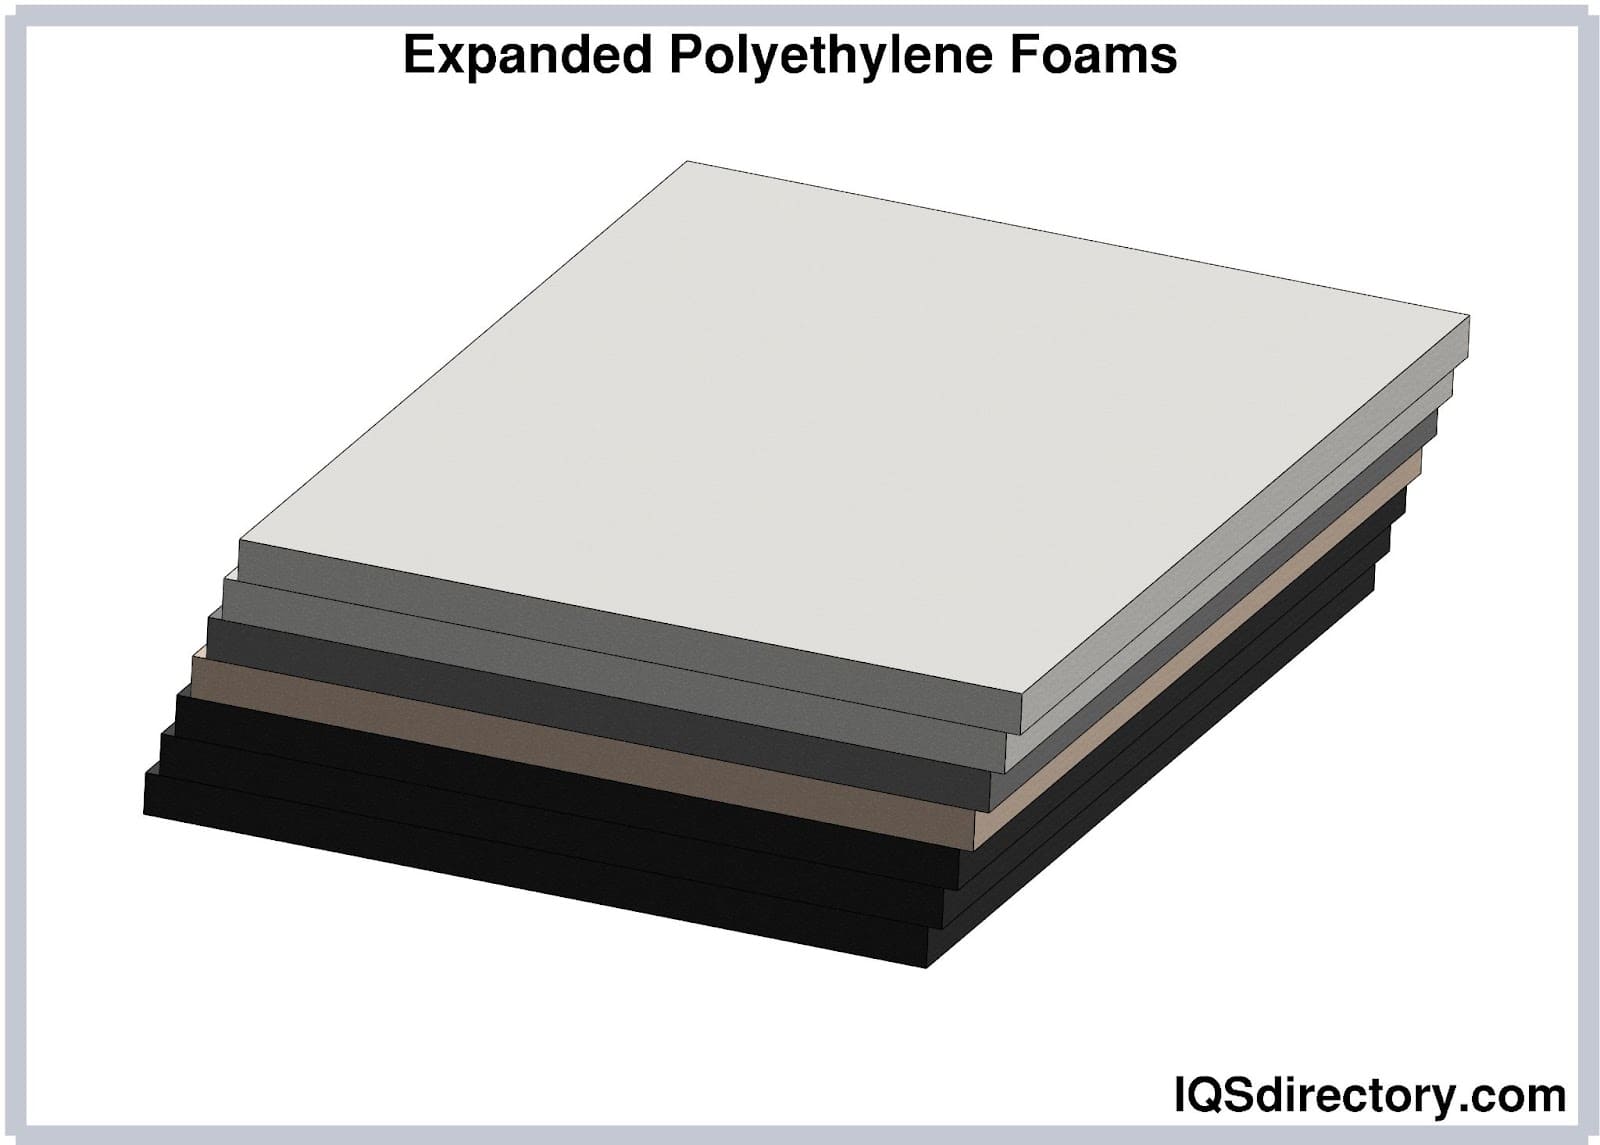 Expanded Polyethylene Foams